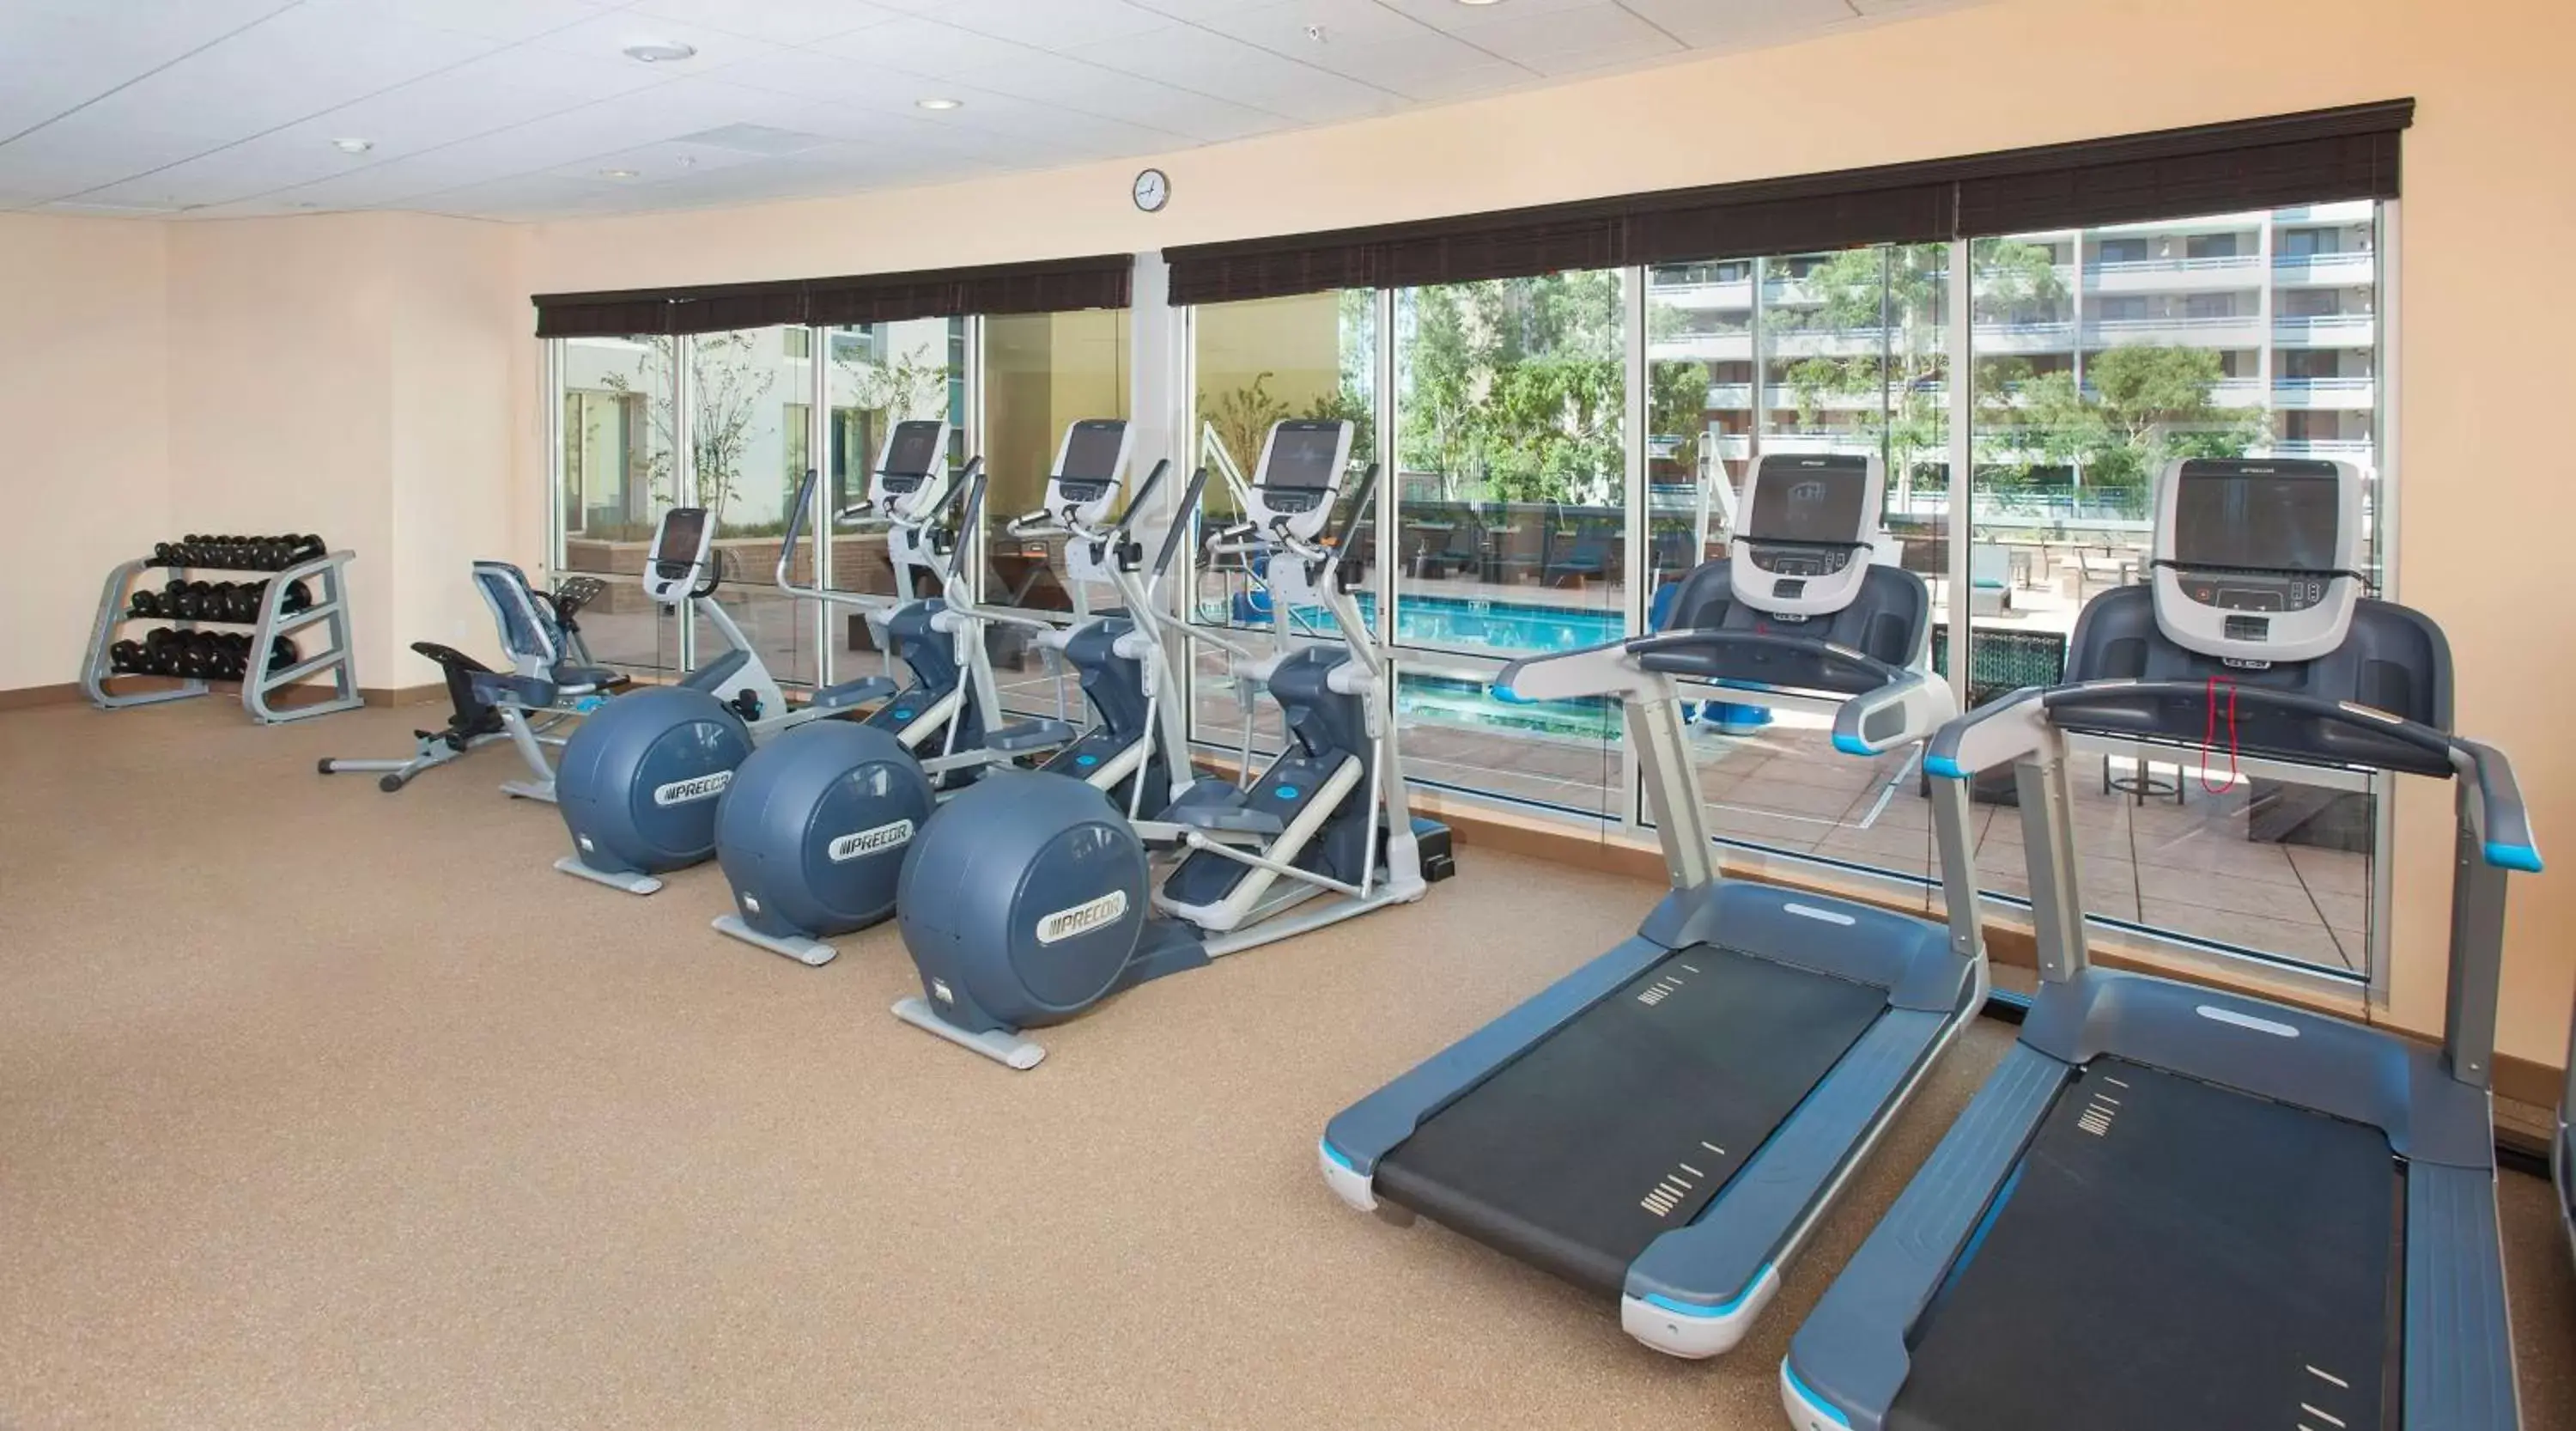 Fitness centre/facilities, Fitness Center/Facilities in Hilton Garden Inn Burbank Downtown